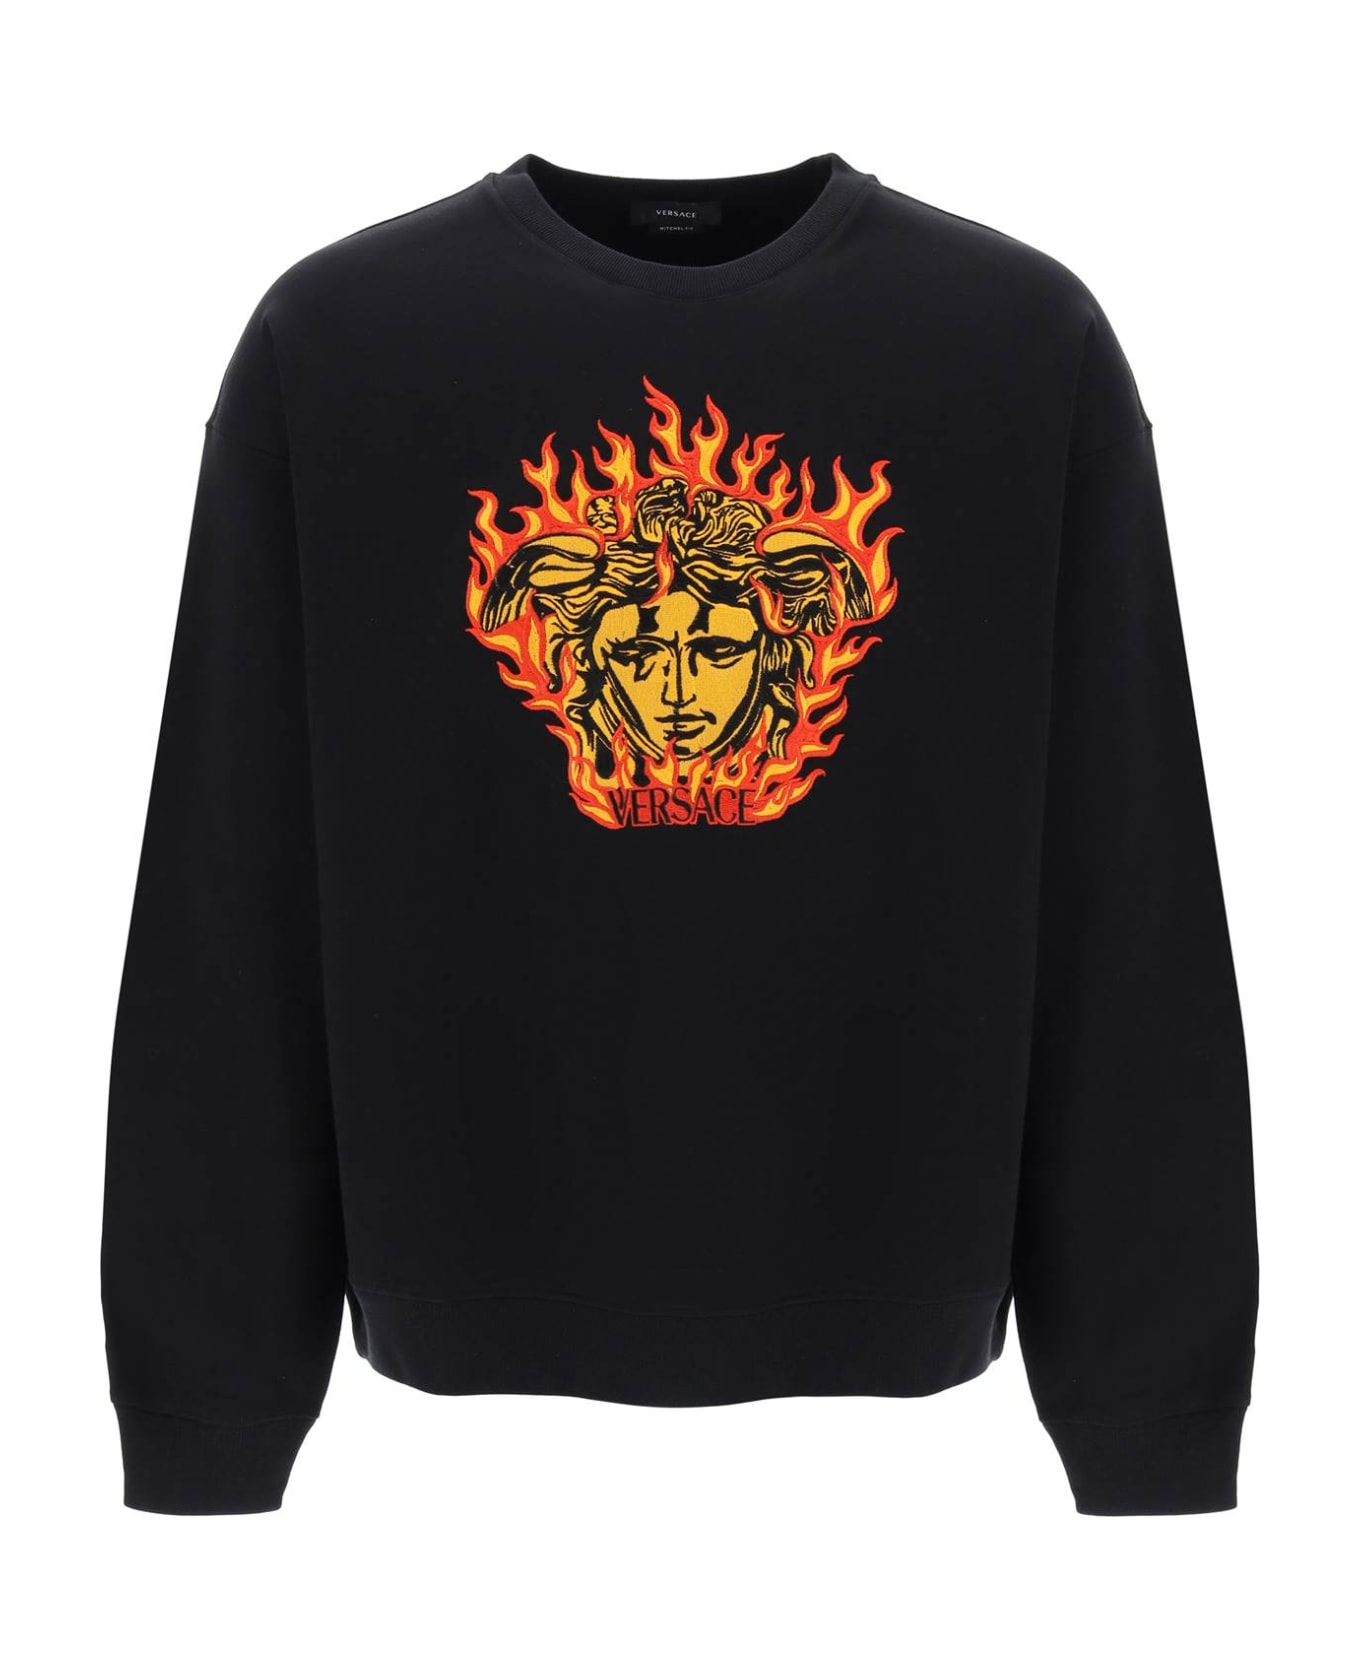 Versace Medusa Flame Sweatshirt - BLACK (Black)